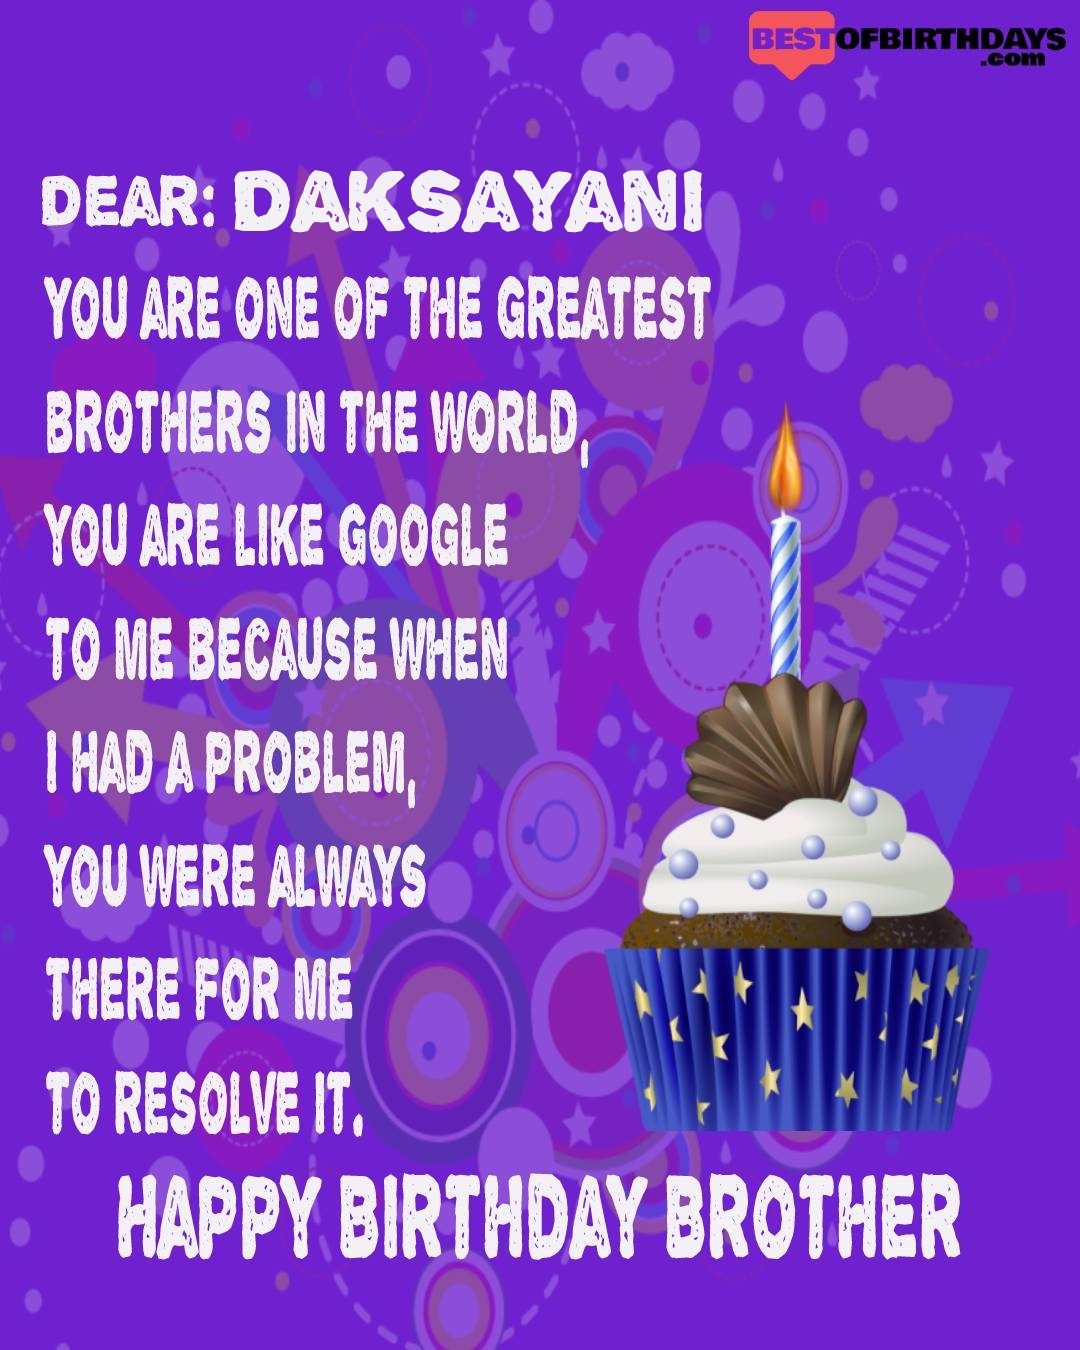 Happy birthday daksayani bhai brother bro